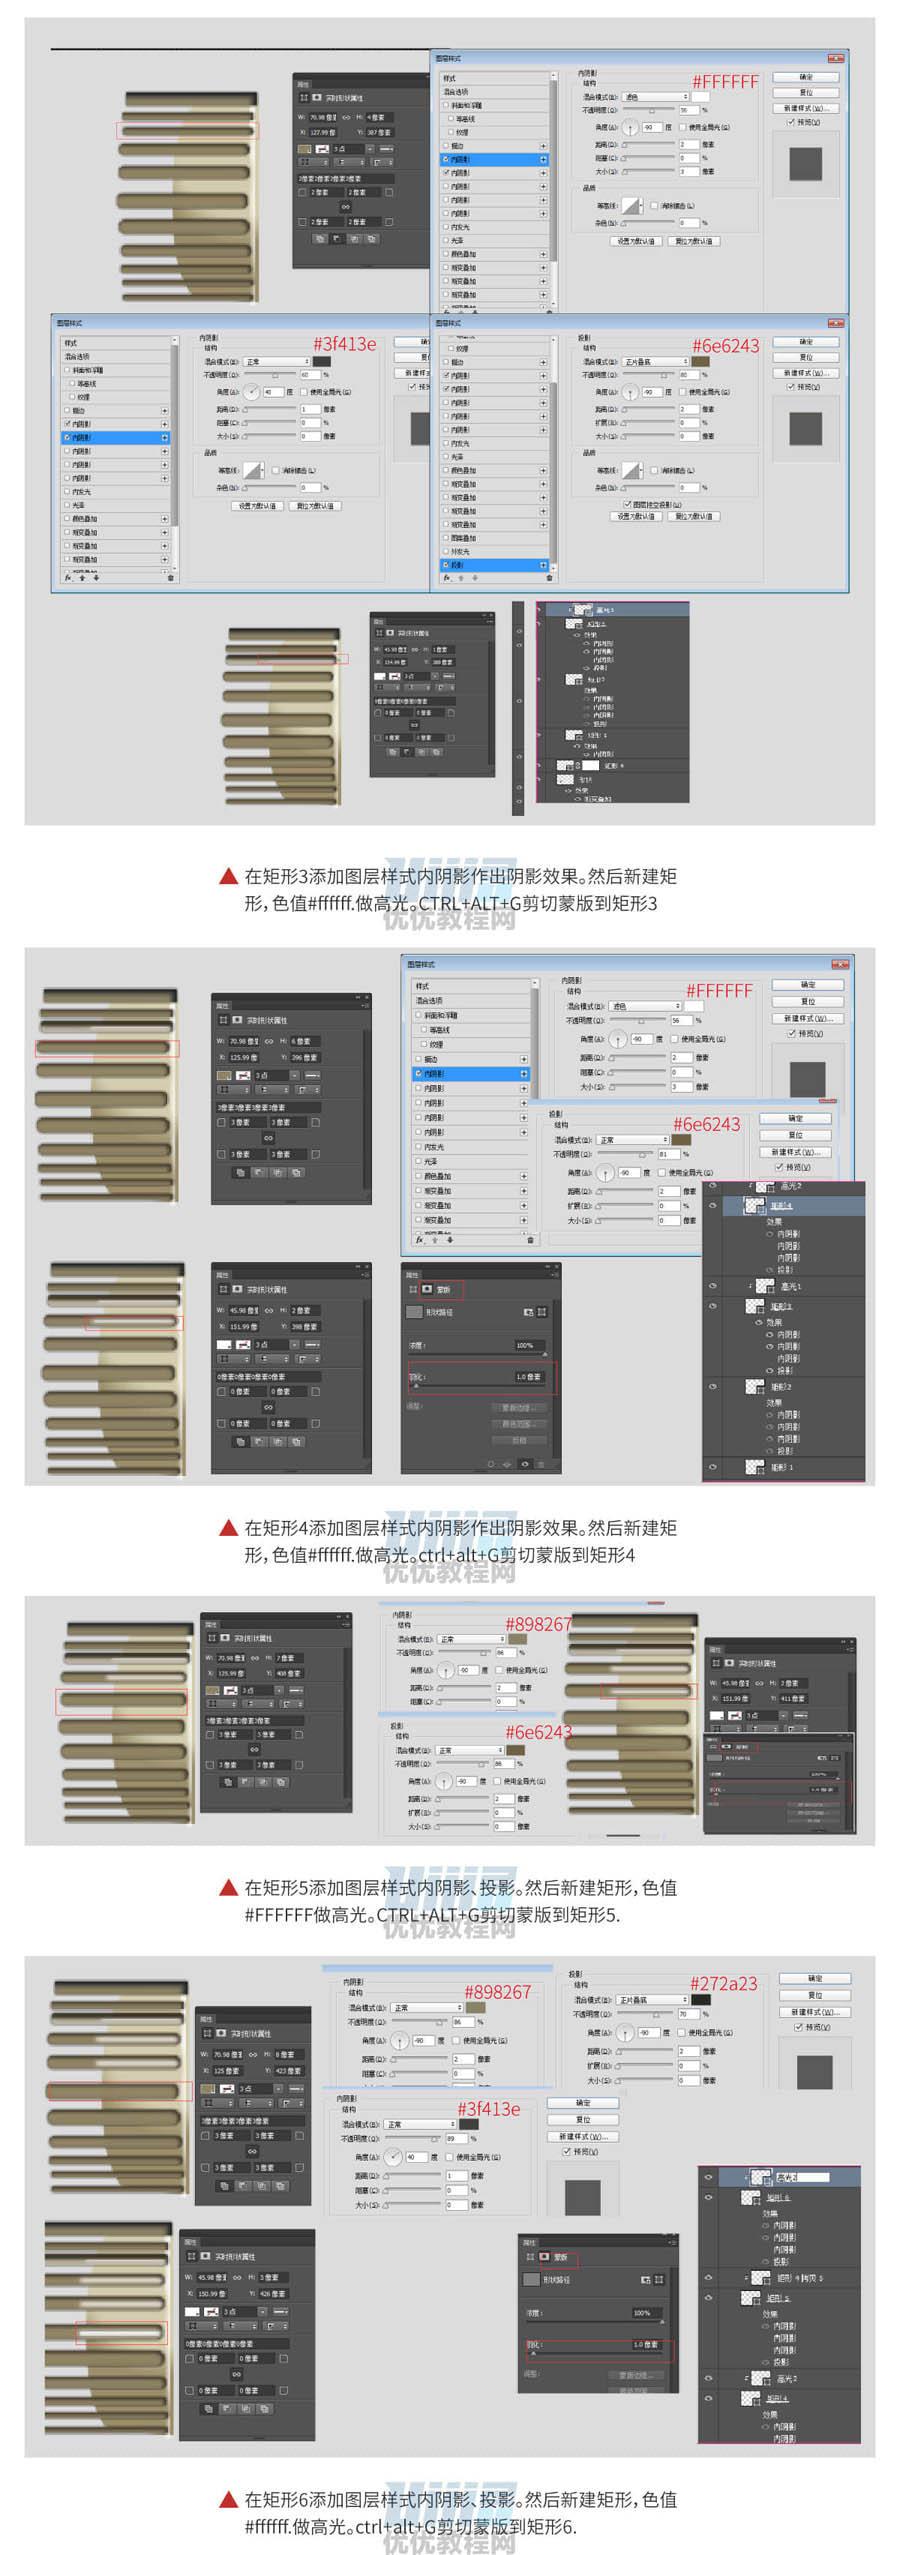 Photoshop绘制柯达老式相机图标教程,PS教程,素材中国网